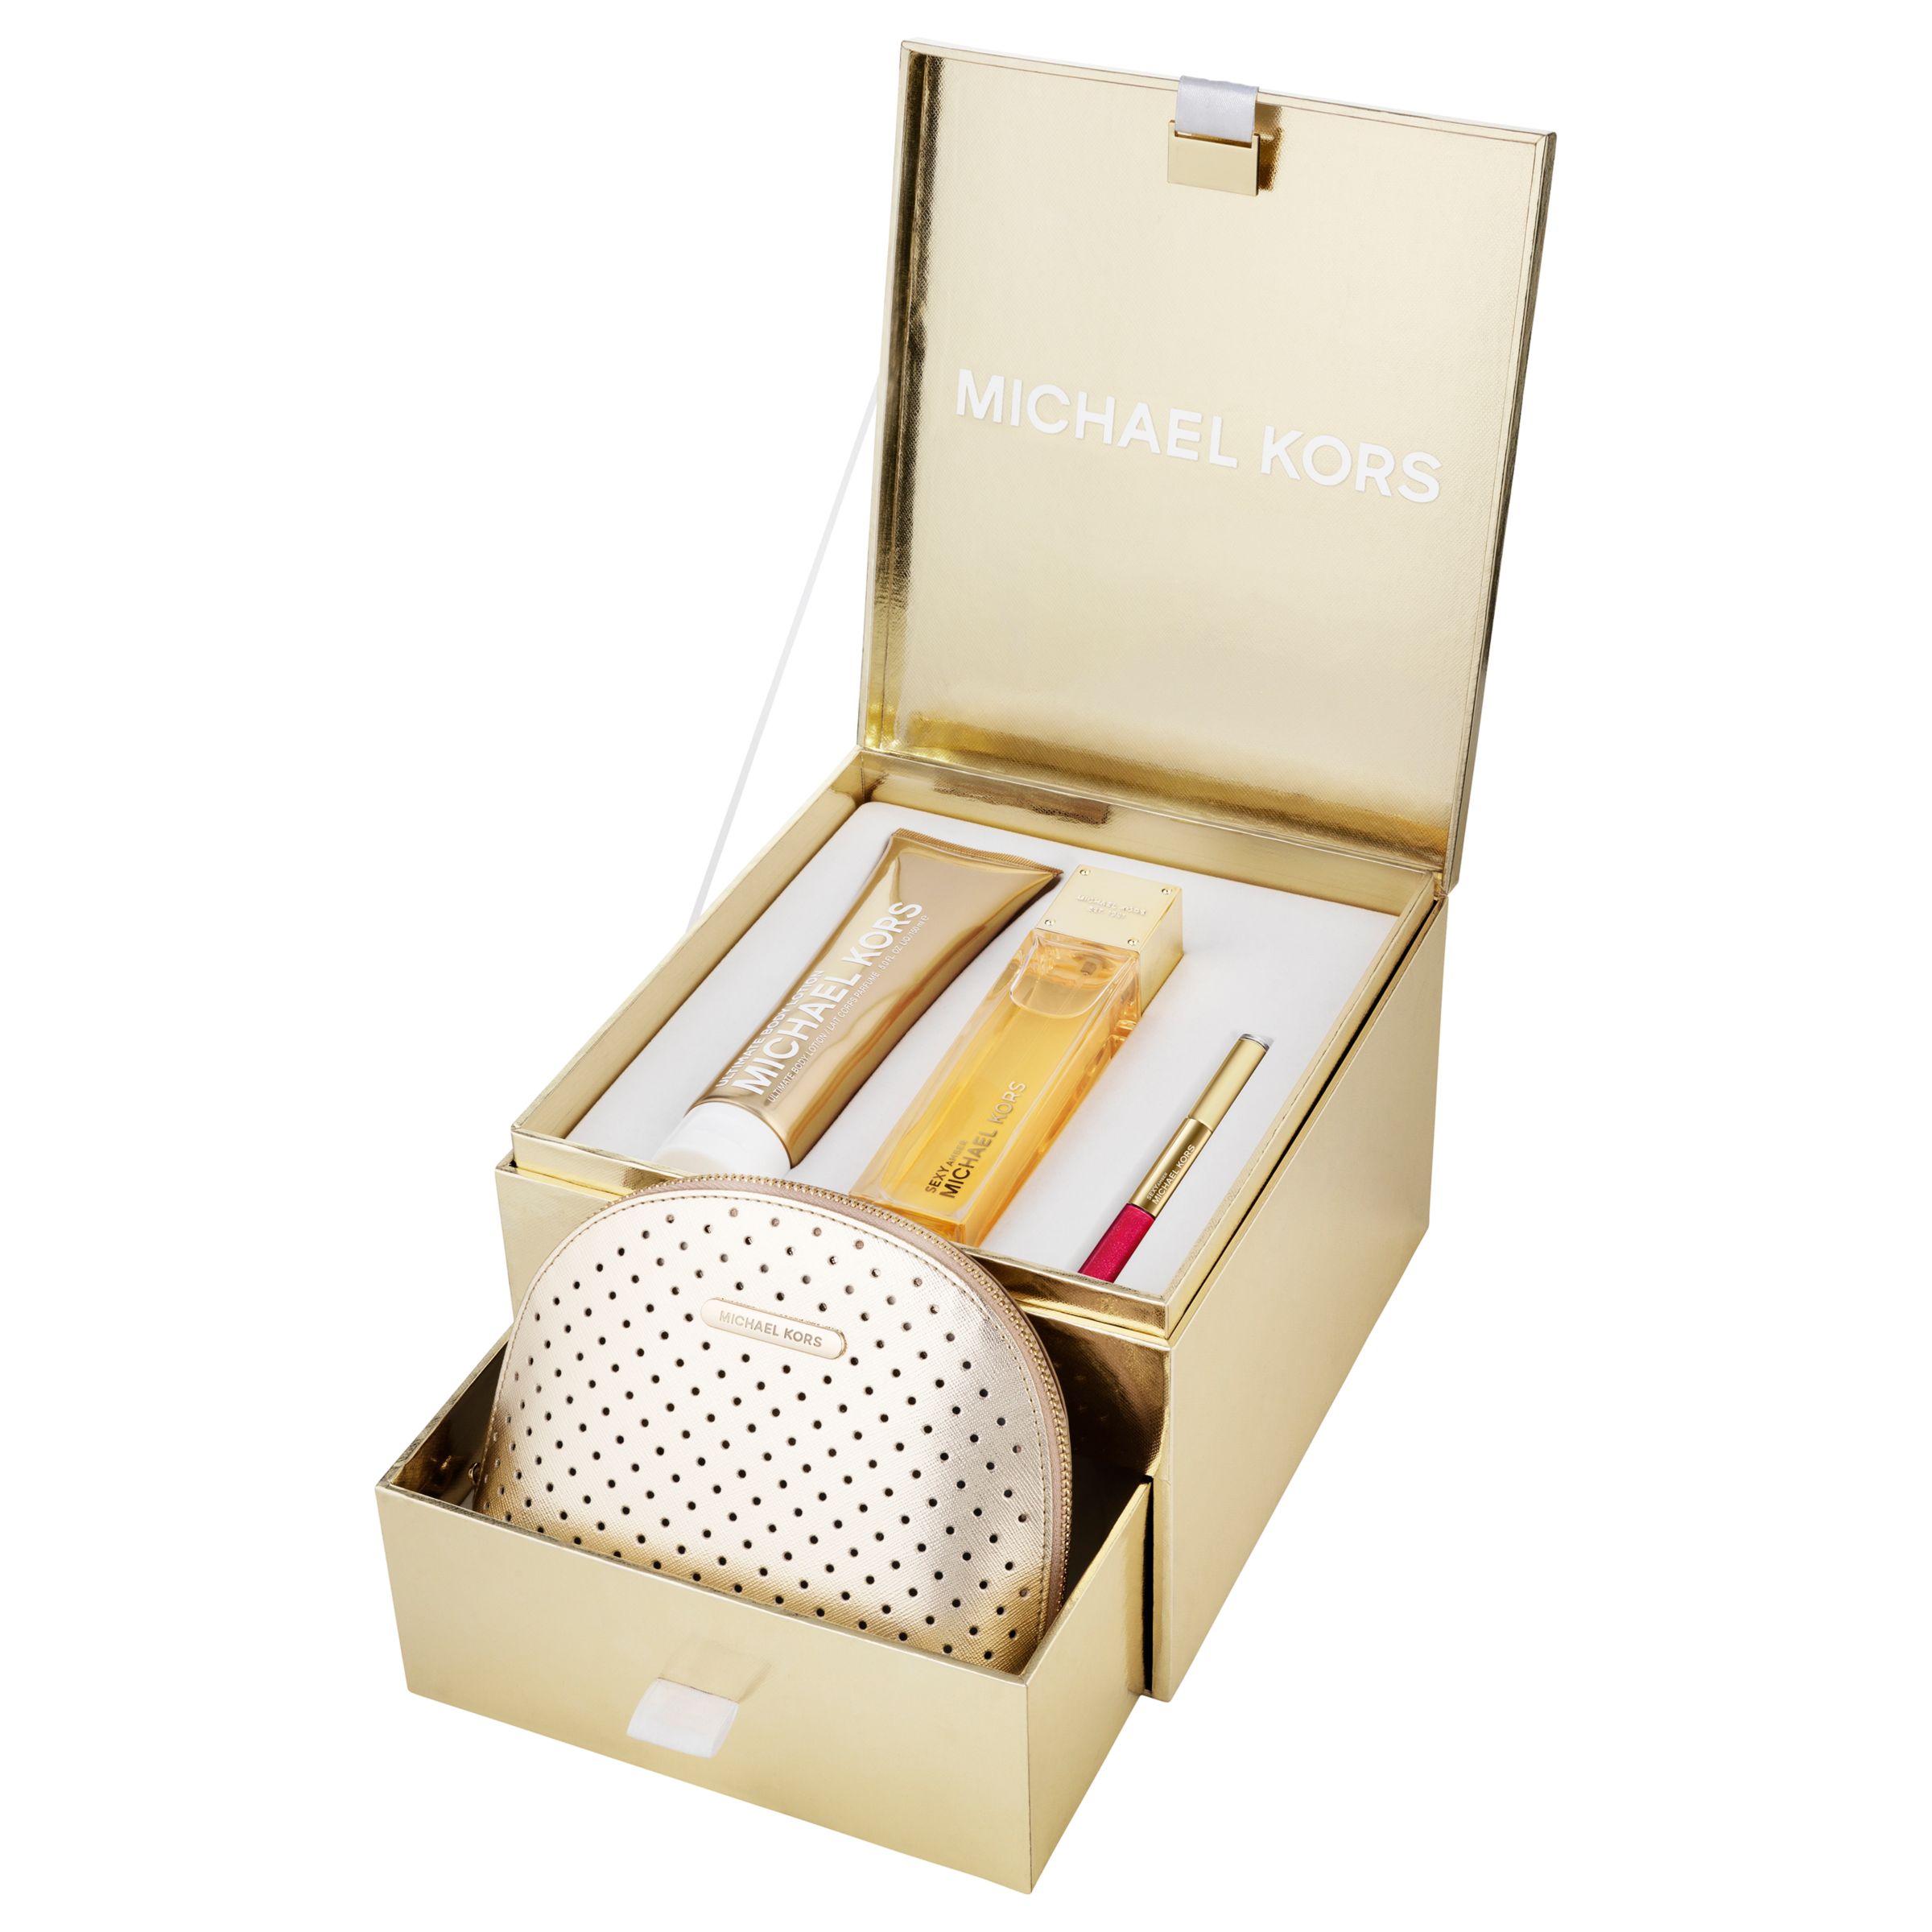 Michael Kors Sexy Amber 100ml Eau de Parfum Deluxe Gift Set